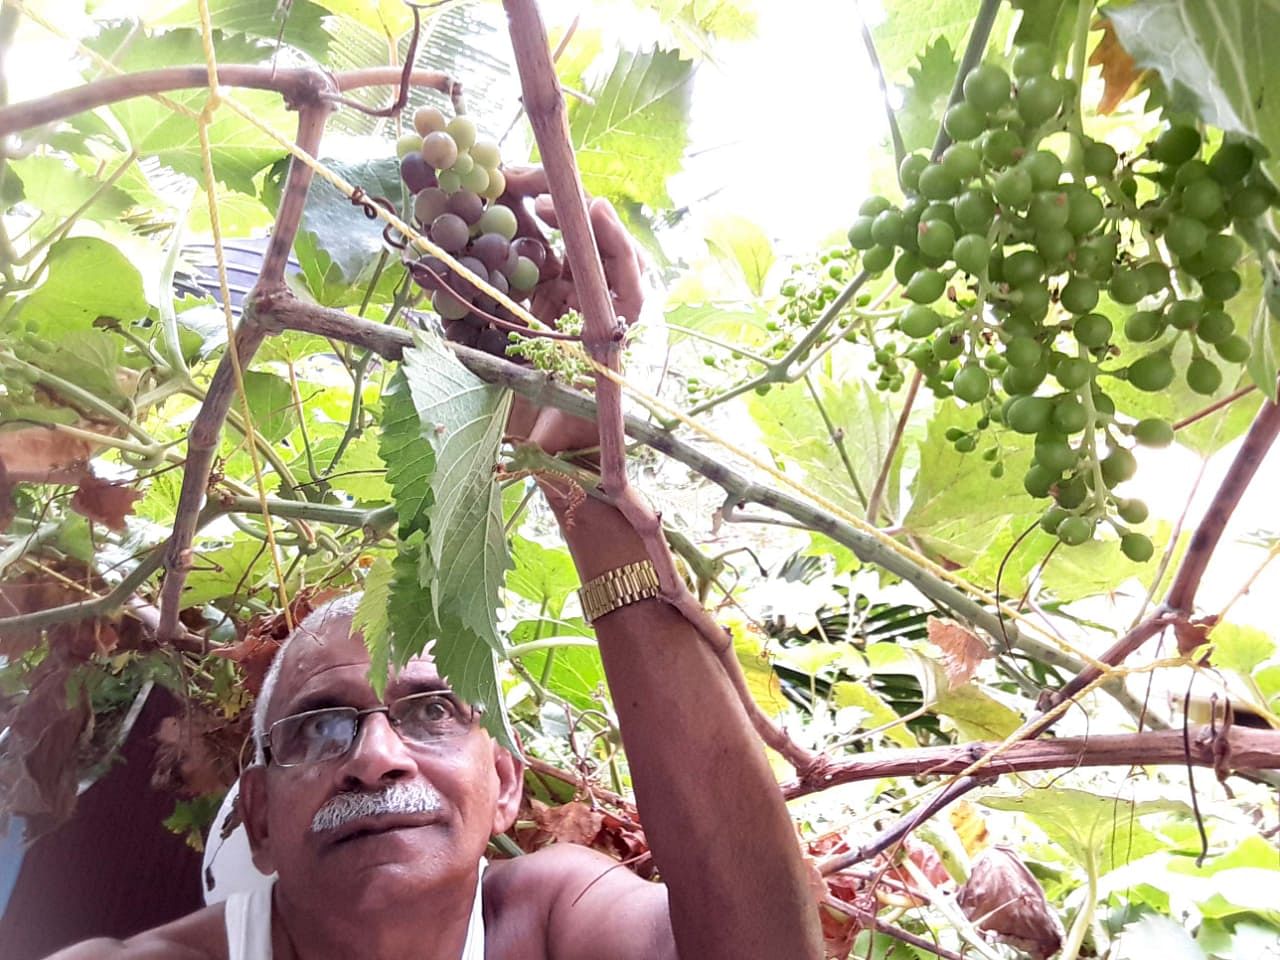 Abu Haji has grown organic grapes in his home